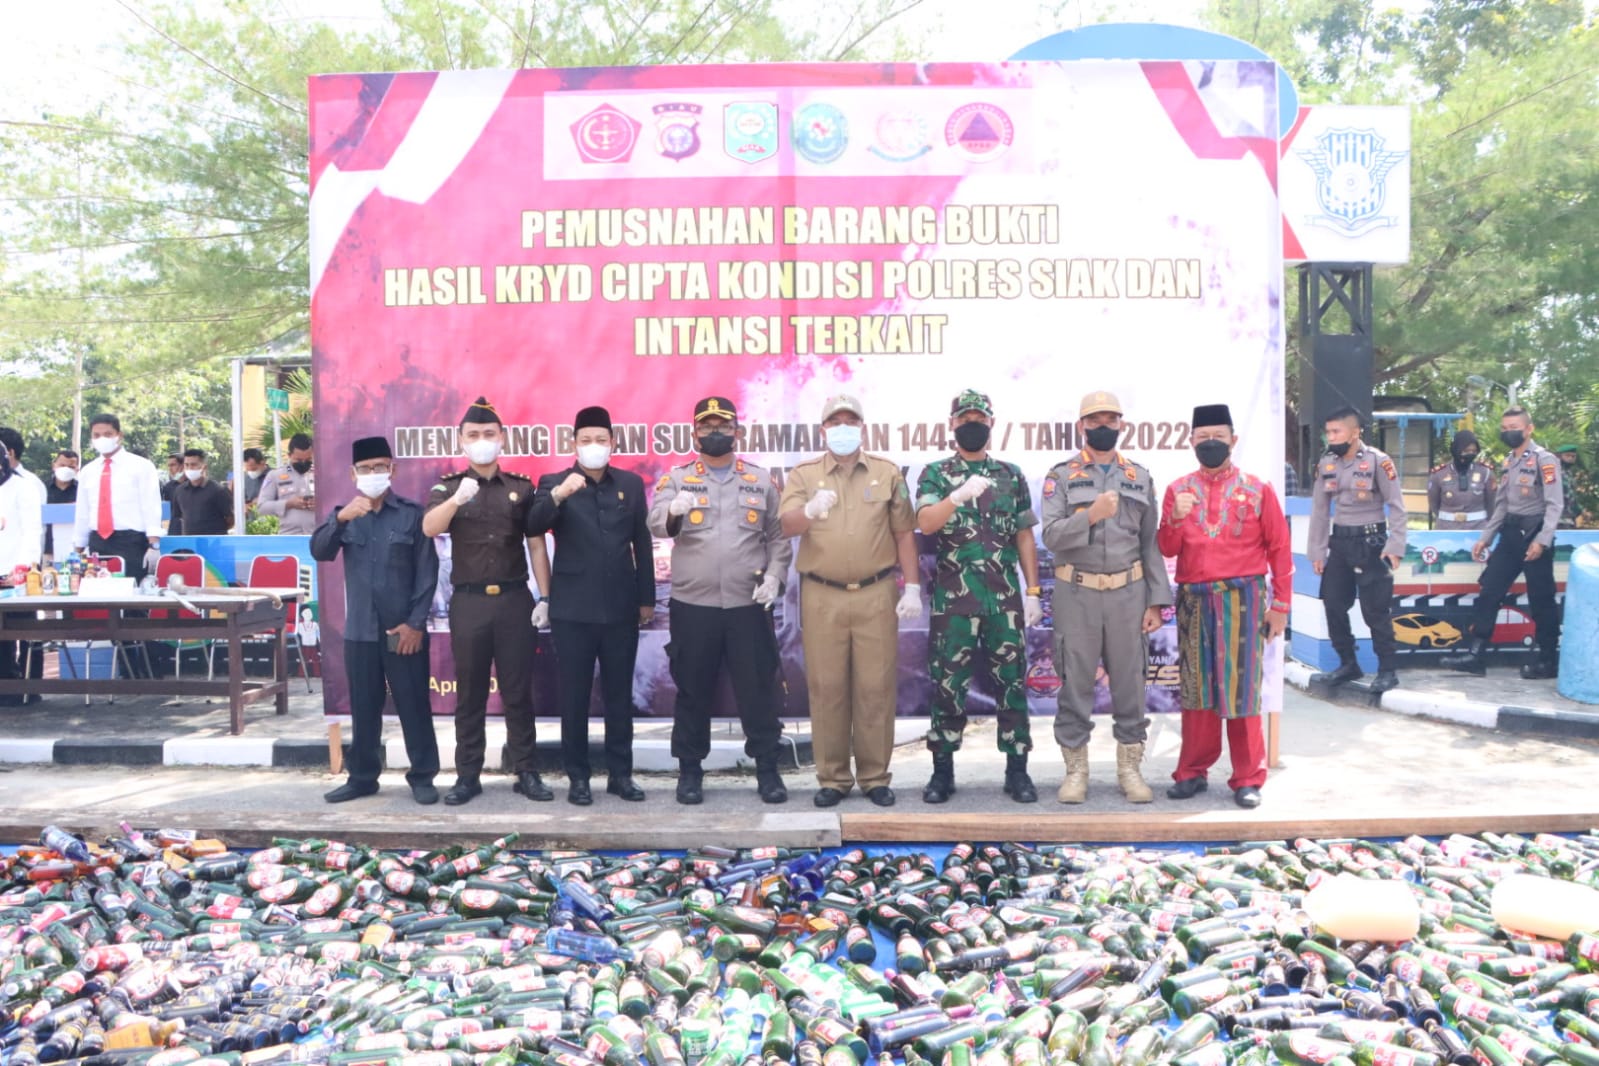 822 Botol Miras dan 108 Knalpot Brong Hasil KRYD Dimusnahkan Polres Siak